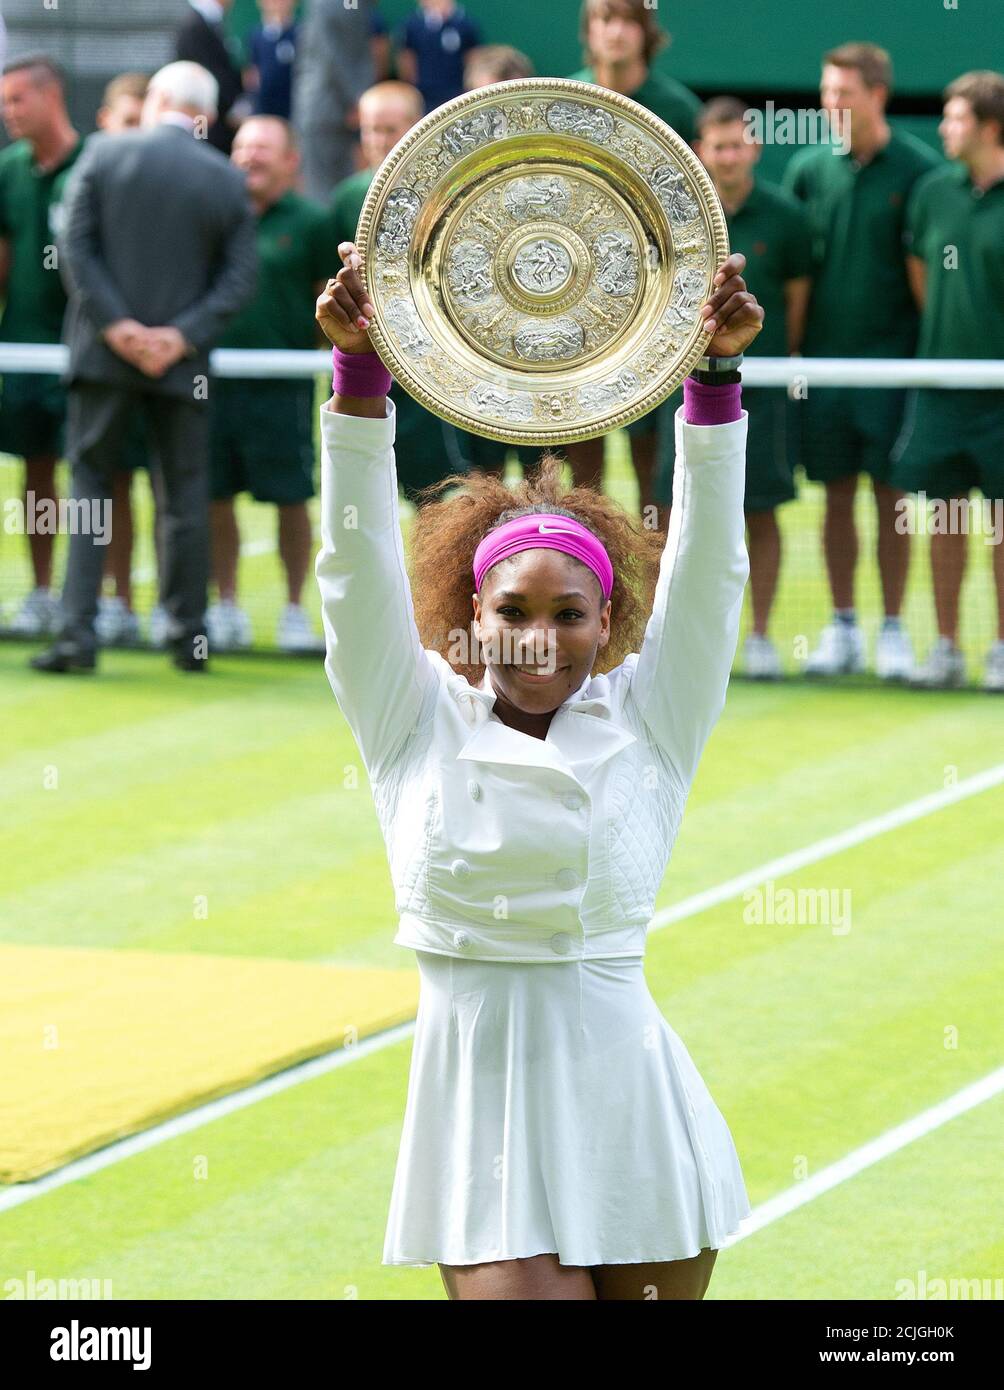 Serena Williams feiert den Gewinn des Wimbledon Ladies Final Wimbledon Tennis Championships, London 30/6/2012 PIC CREDIT : © MARK PAIN/ ALAMY Stockfoto